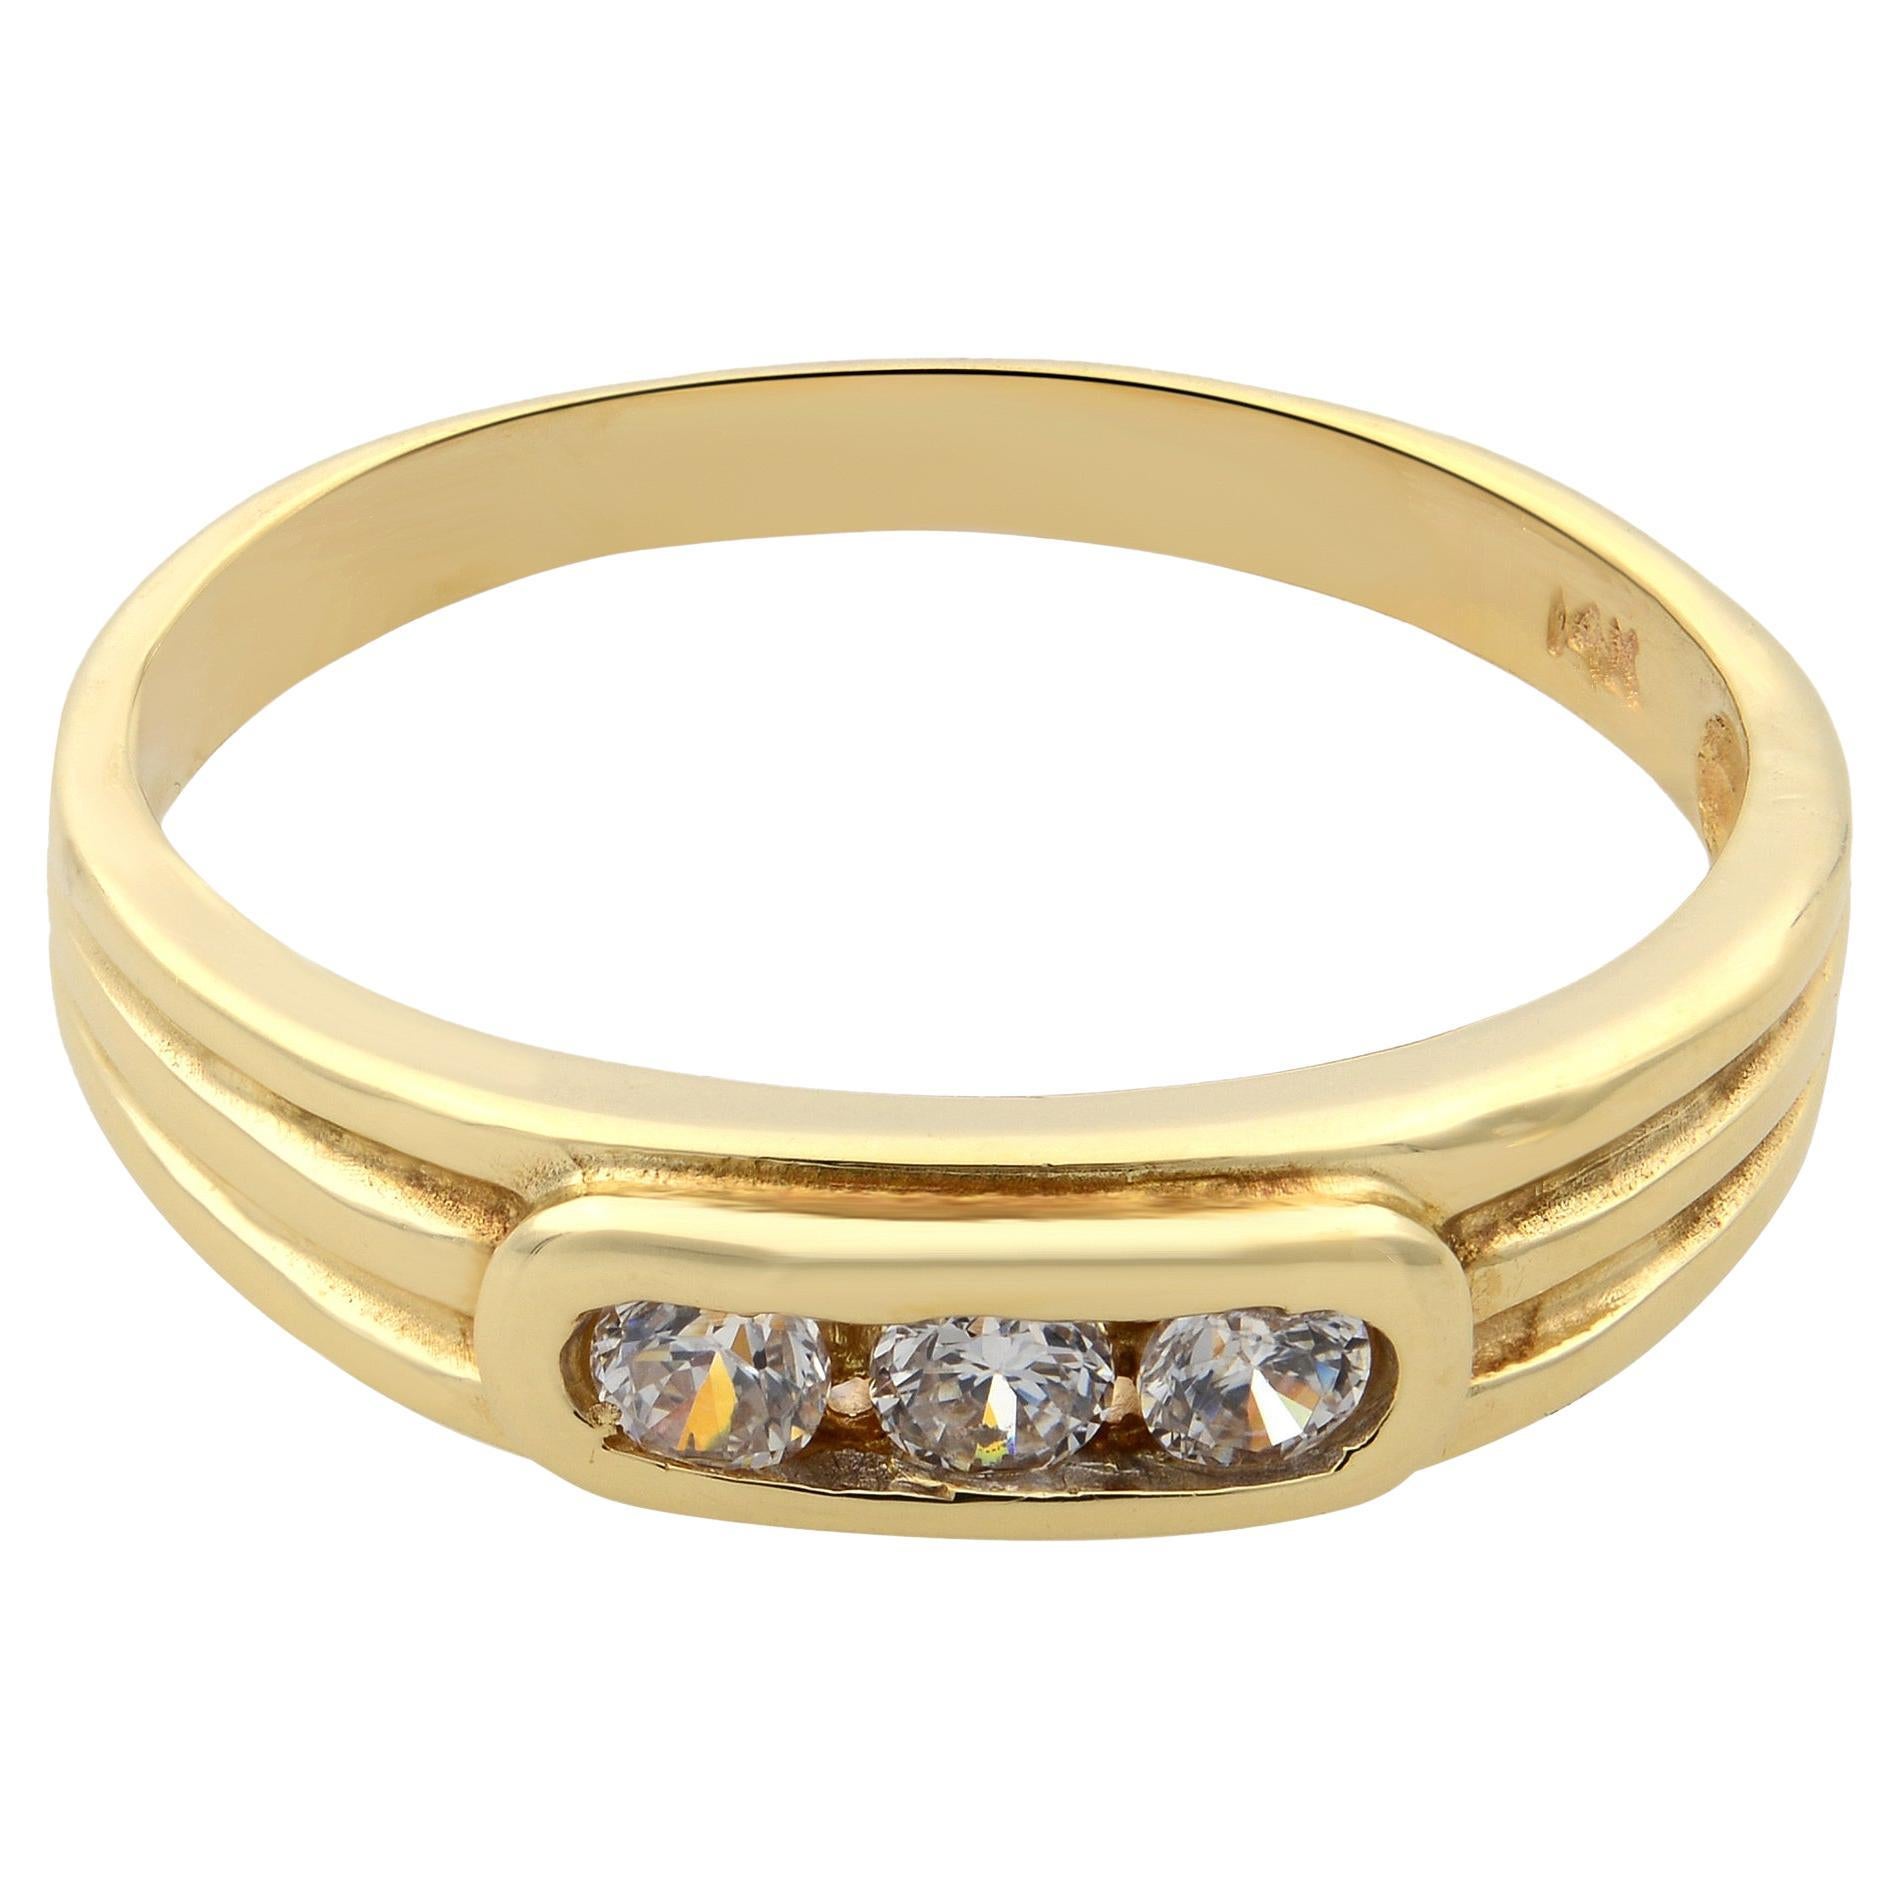 Rachel Koen 0.25Cttw Diamond Ladies Band Ring 14K Yellow Gold Size 9.75